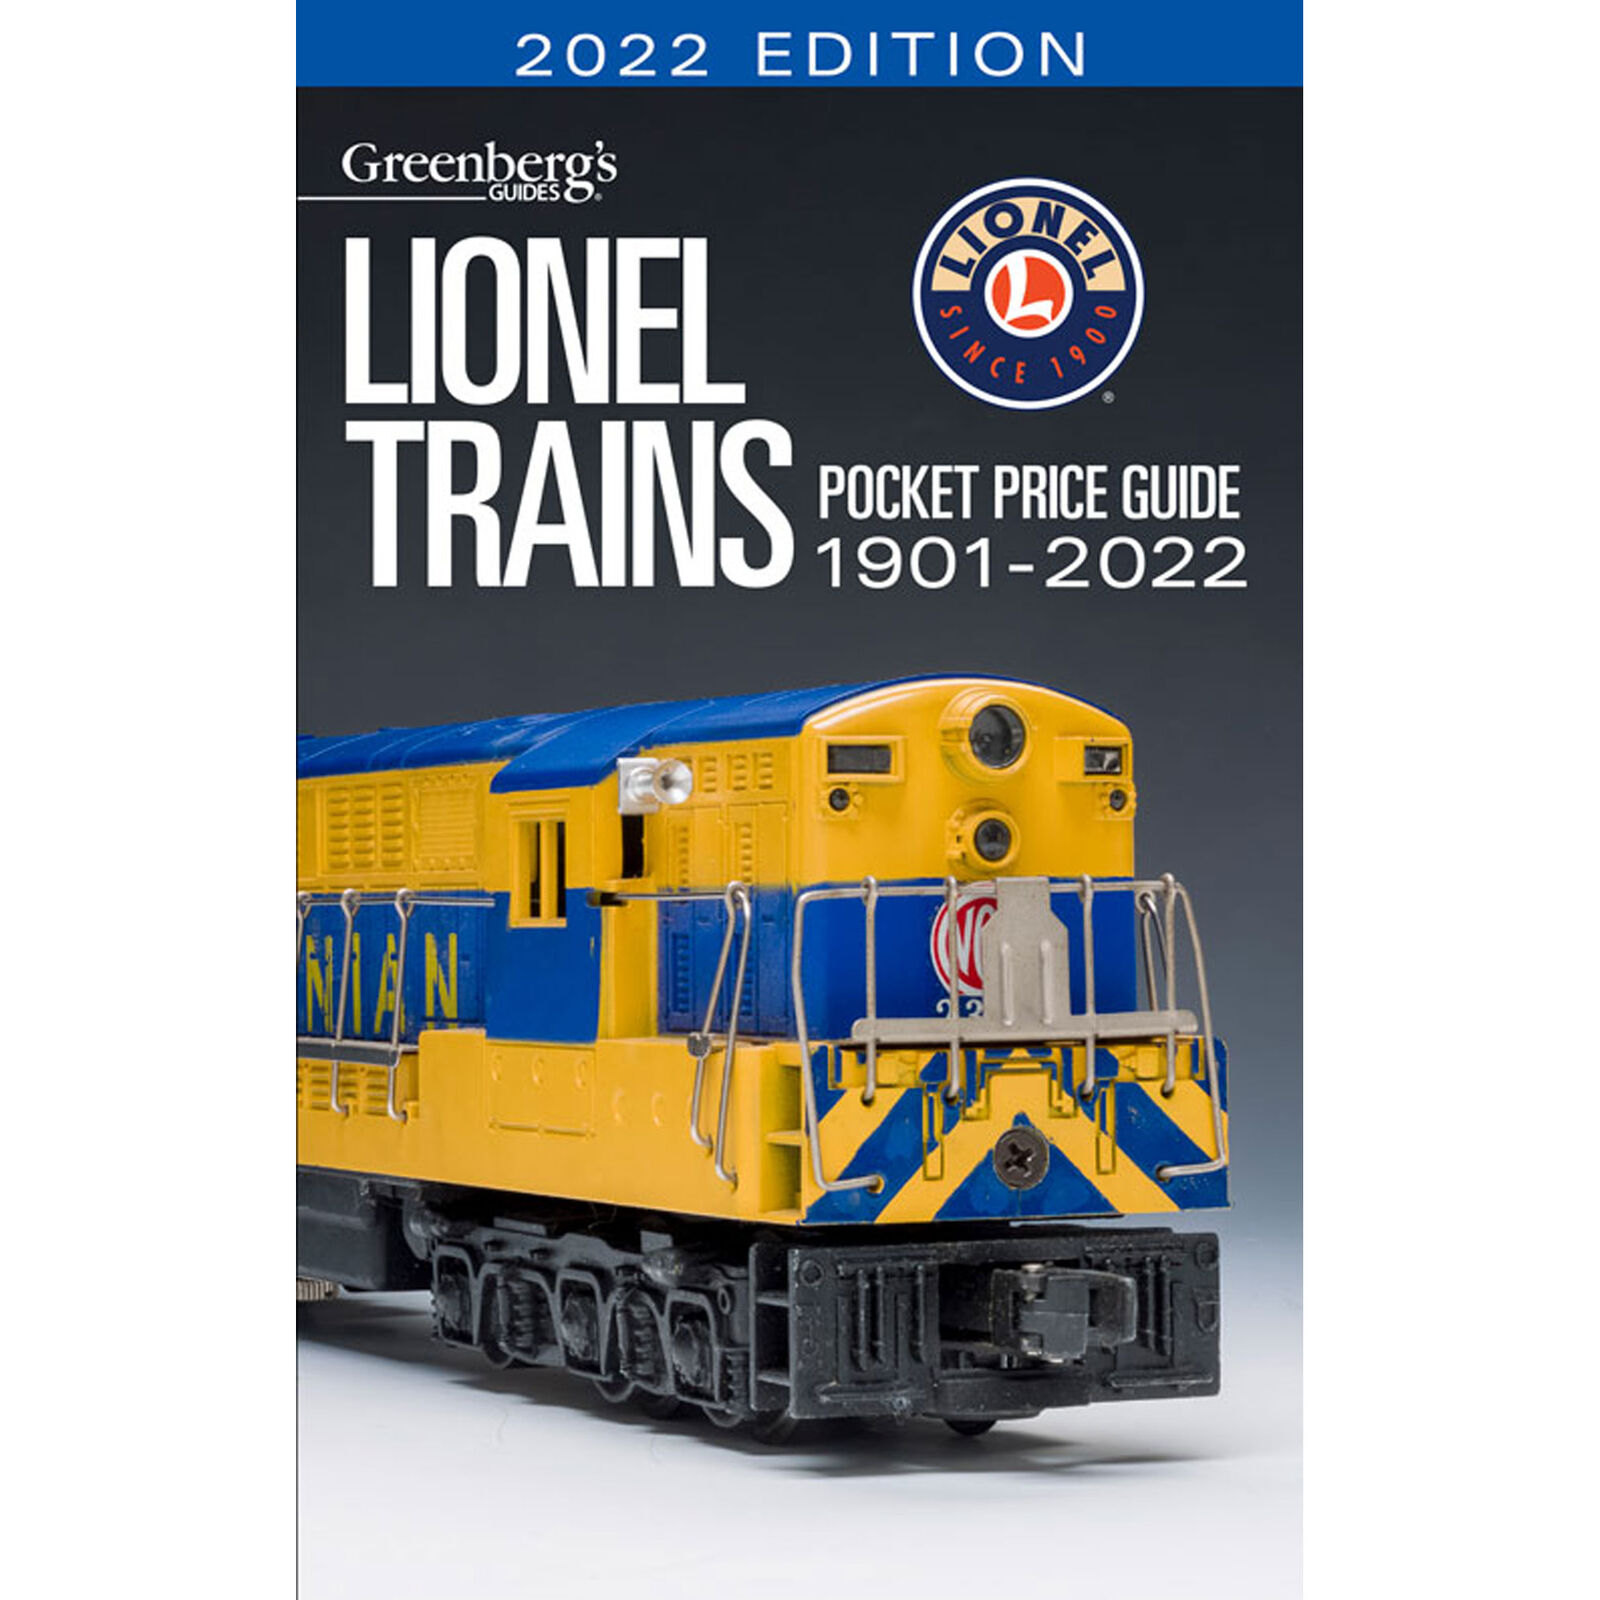 Lionel Trains Pocket Price Guide 1901-2022